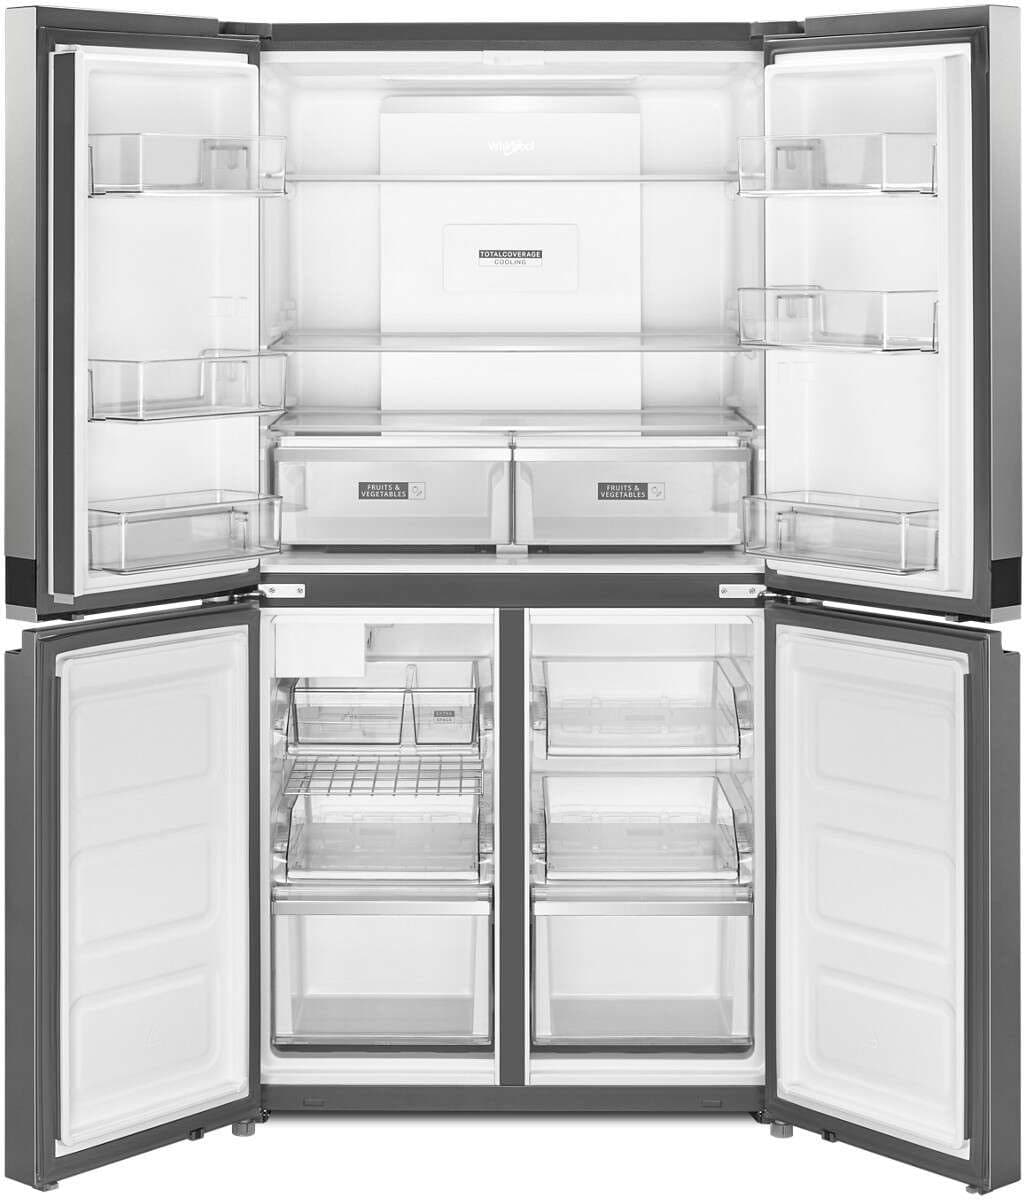 Whirlpool - 19.4 Cu. Ft. 4-Door French Door Counter-Depth Refrigerator with Flexible Organization Spaces - Stainless steel_1